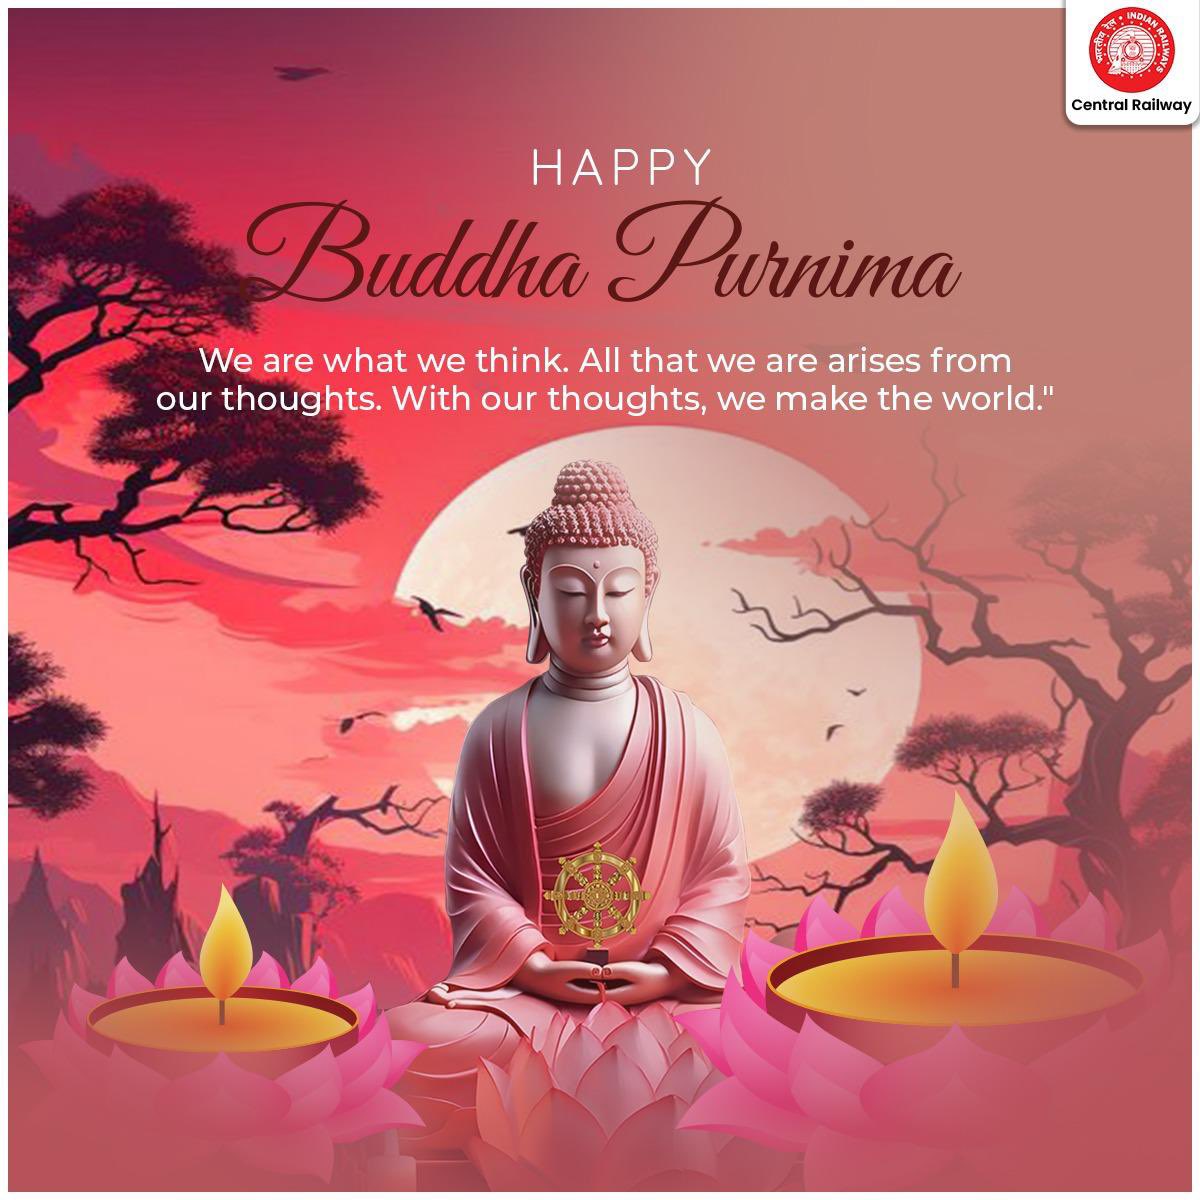 Celebrating Buddha Purnima with the inspiring words of Buddha – 'The mind is everything. What you think, you become.’
#BuddhaPurnima #Mindfulness #CentralRailway